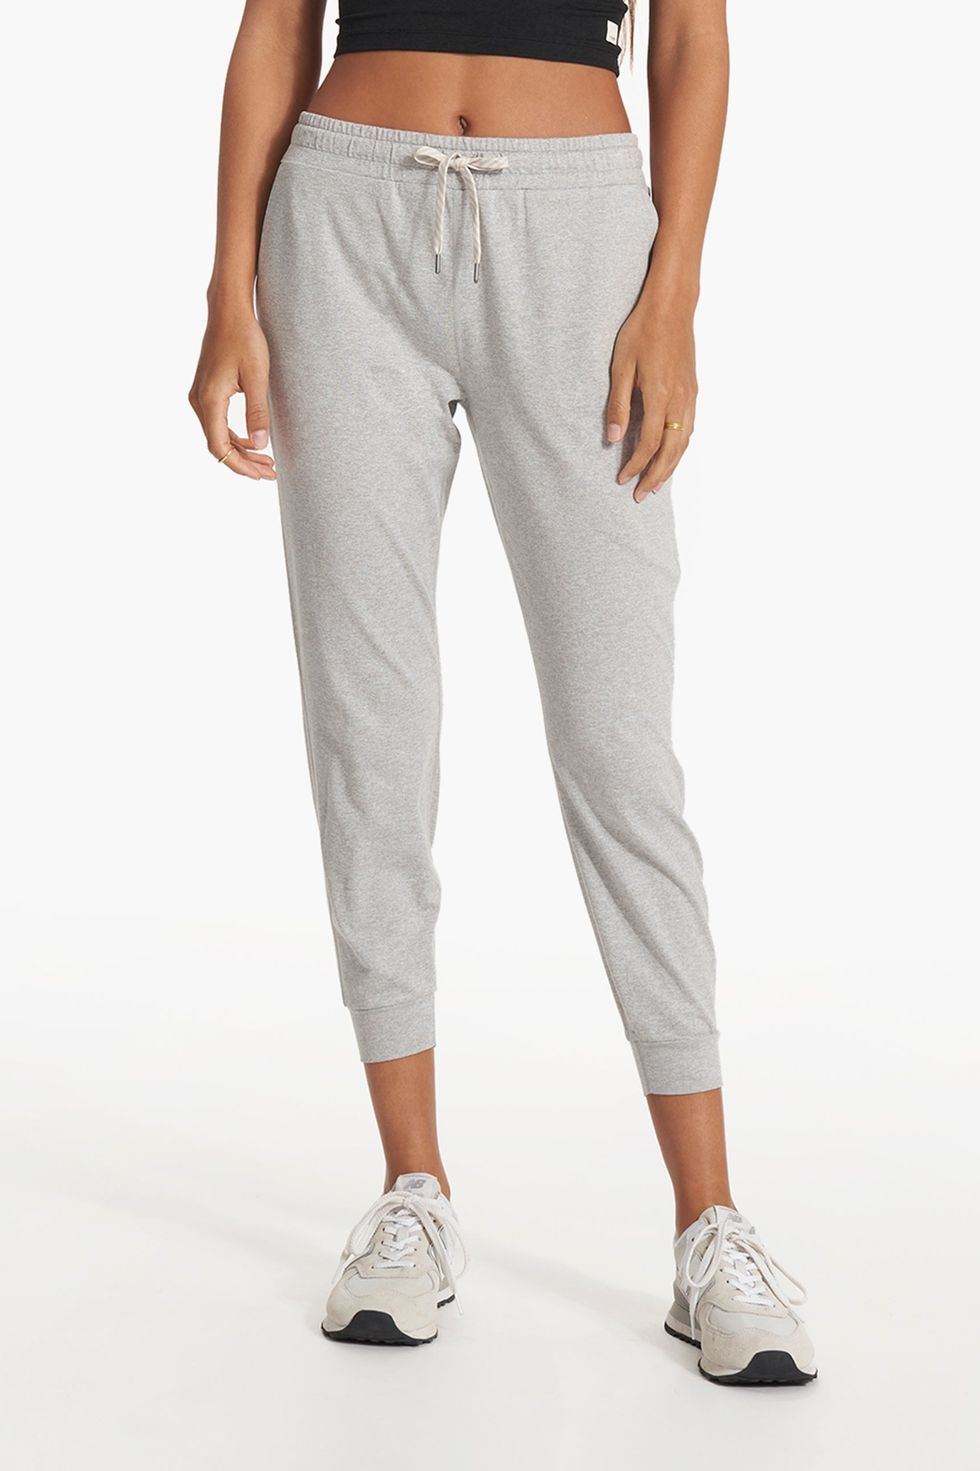 Hanes Women's EcoSmart Cinched Cuff Sweatpants size XL(16/18)